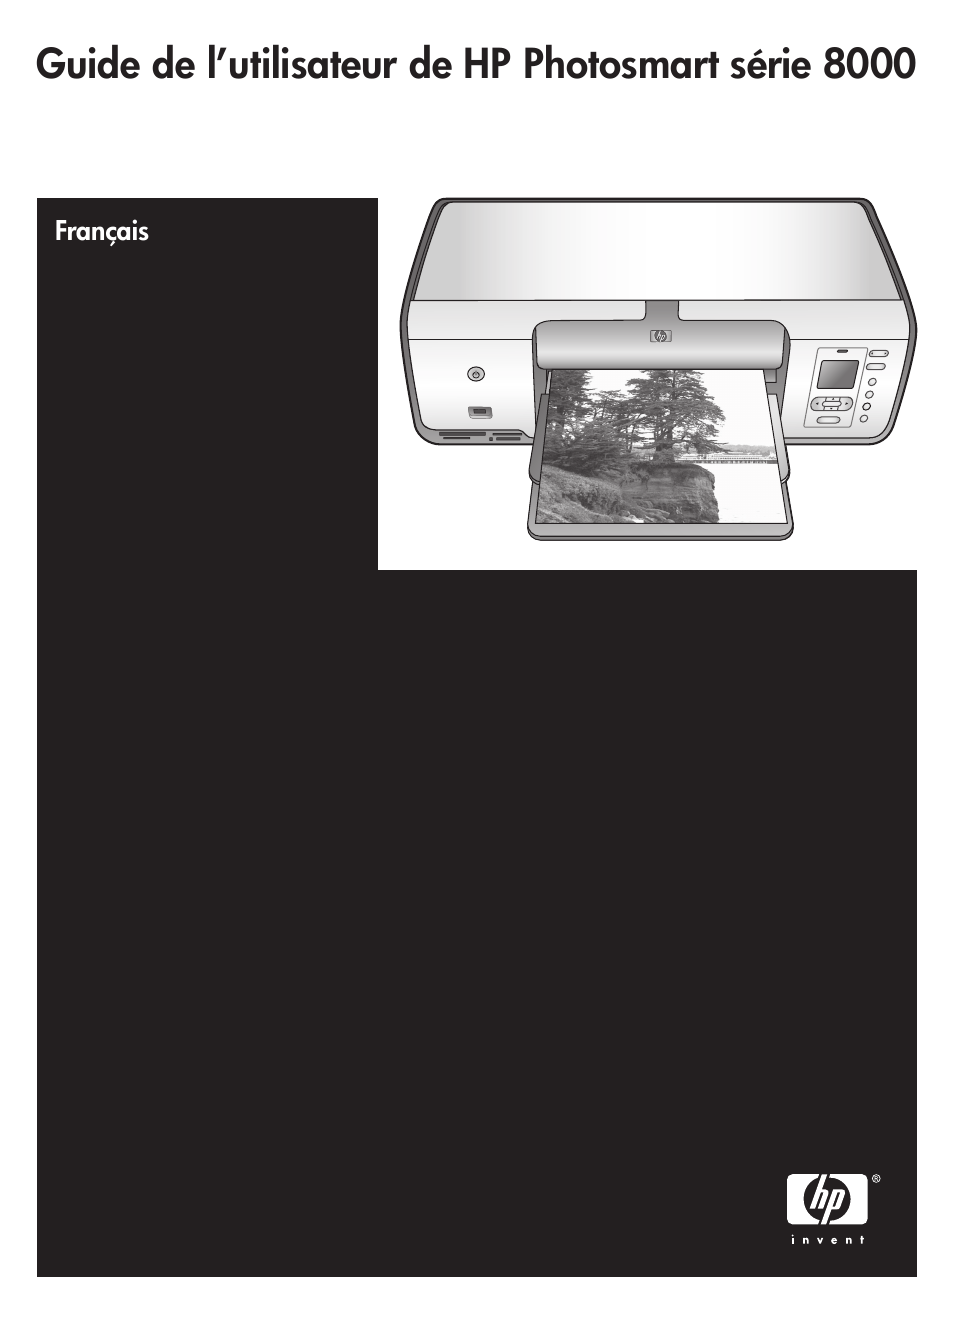 HP Photosmart 8050xi Printer Manuel d'utilisation | Pages: 74